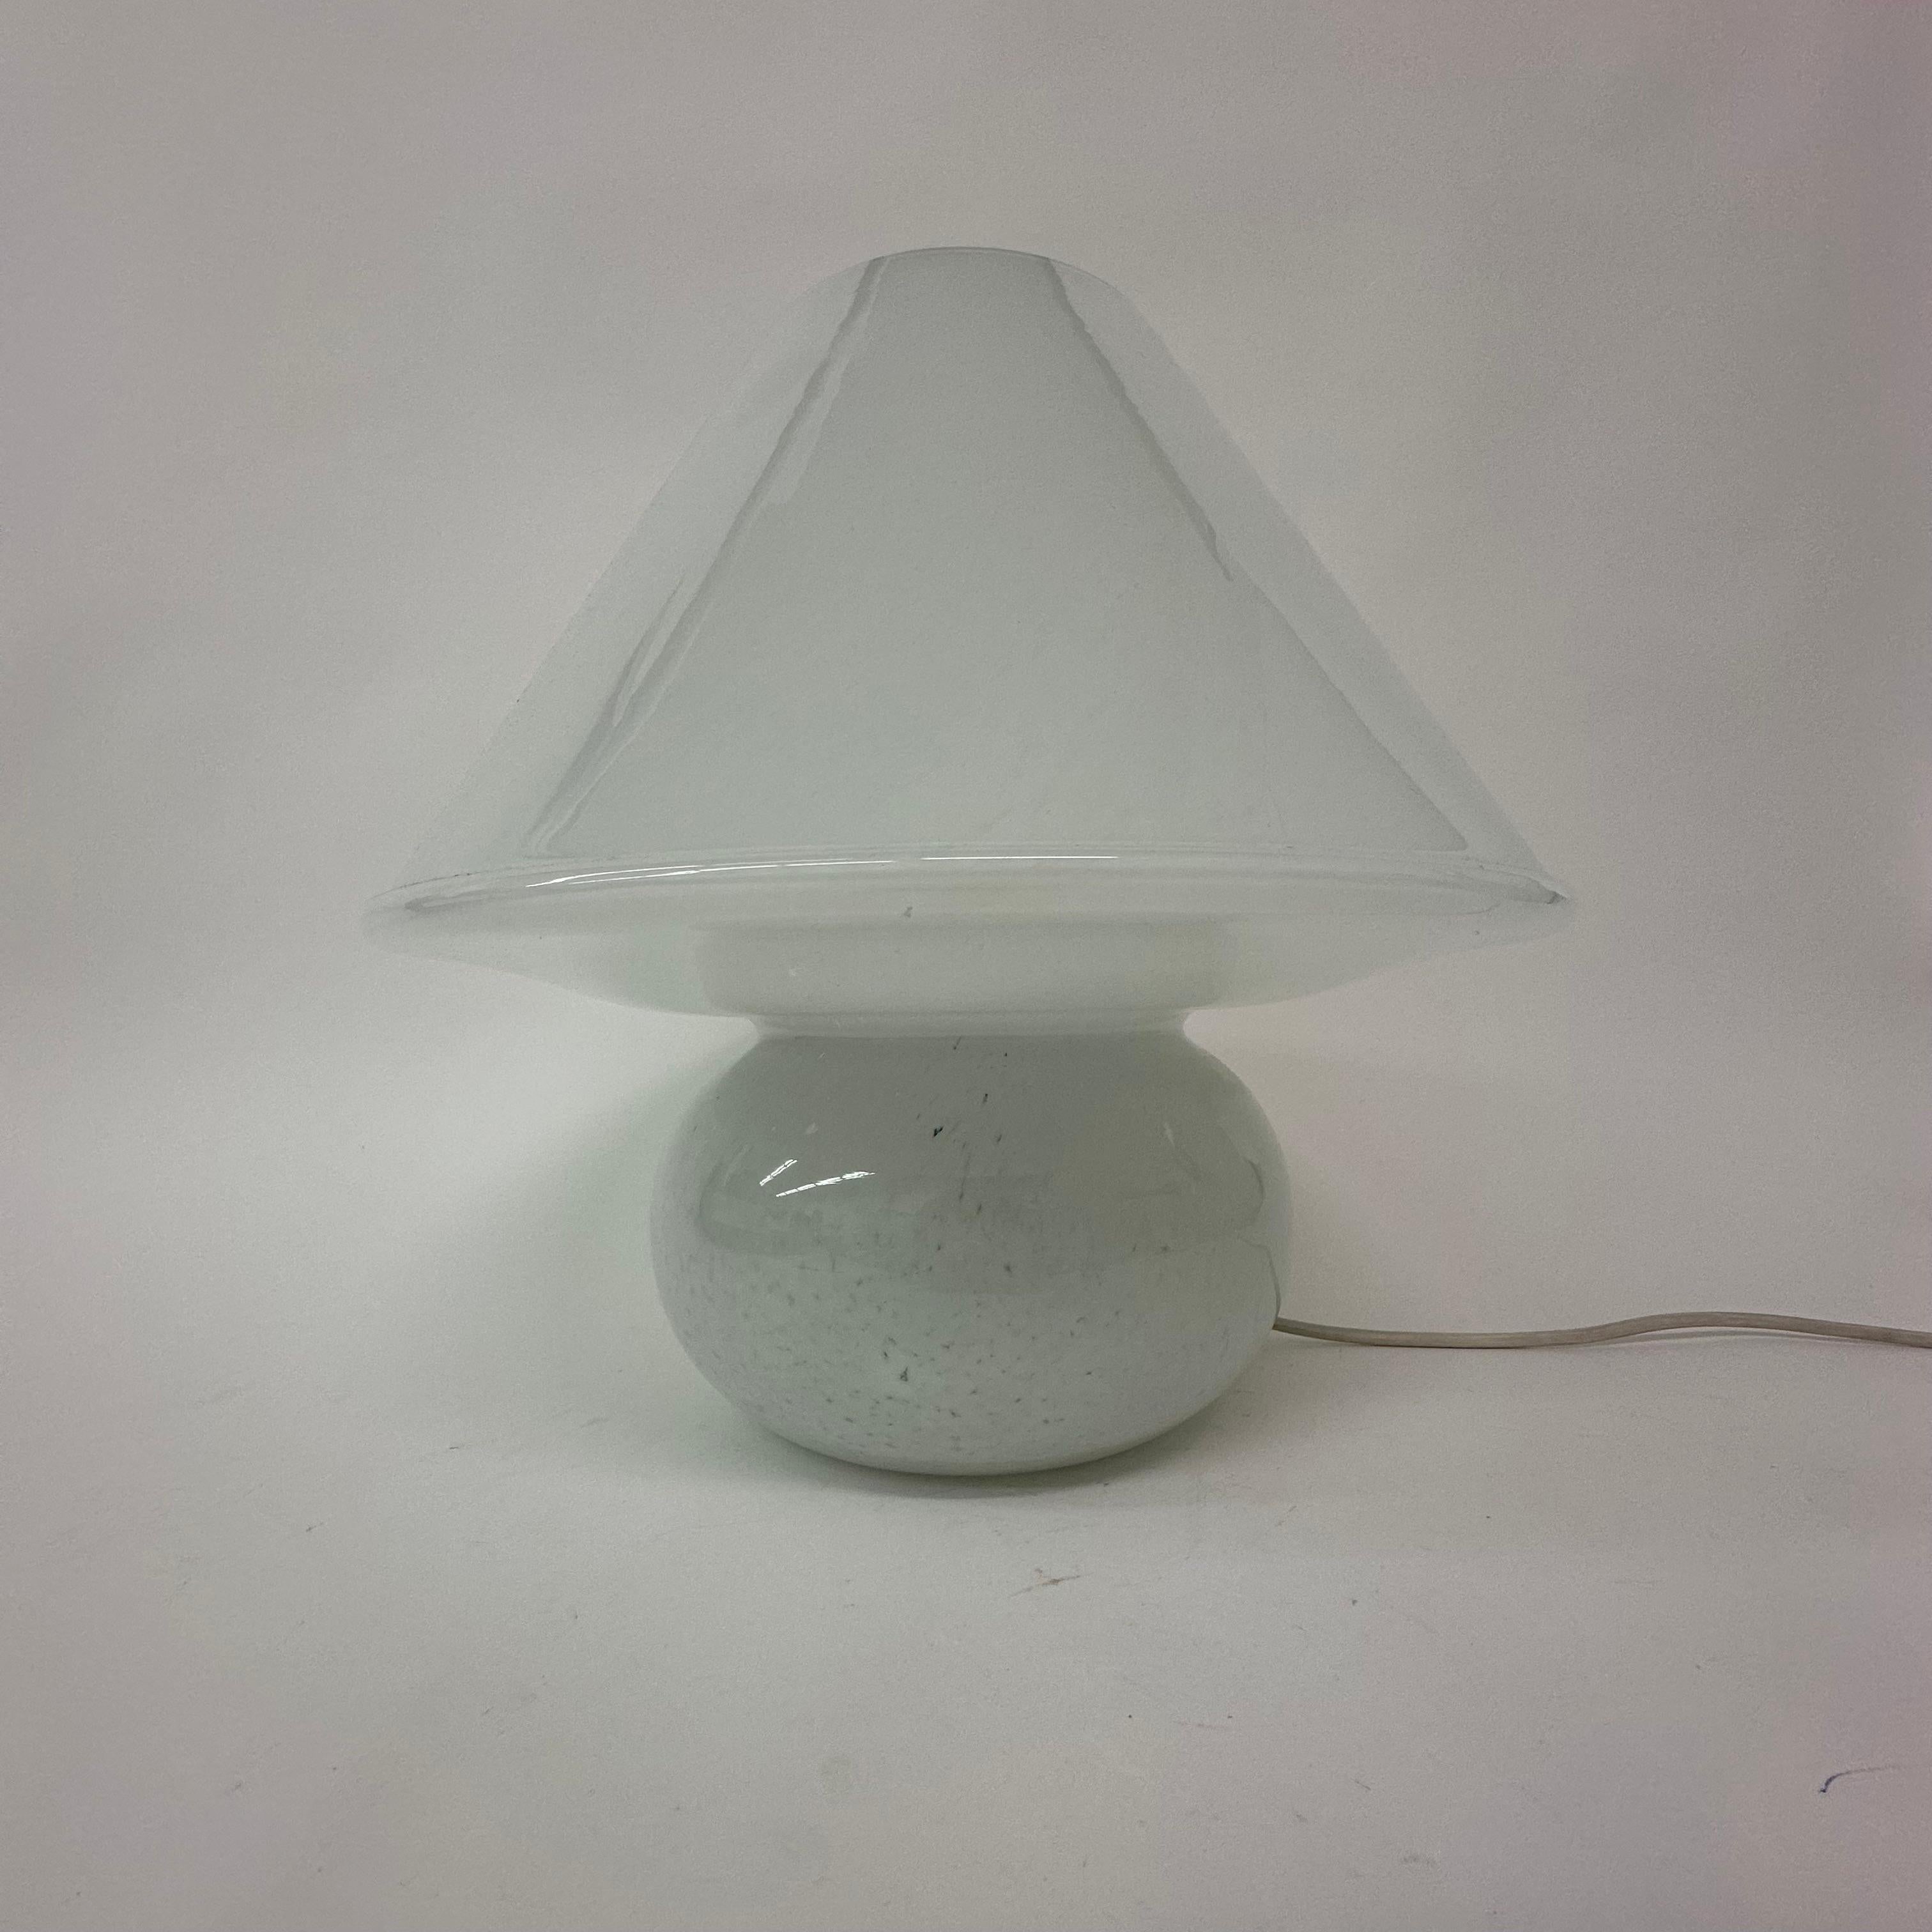 Limburg Glashütte glass table lamp mushroom , 1970’s

Dimensions: 38 cm H, 38cm Diameter
Material : Glass
Origin: Germany
Color: White